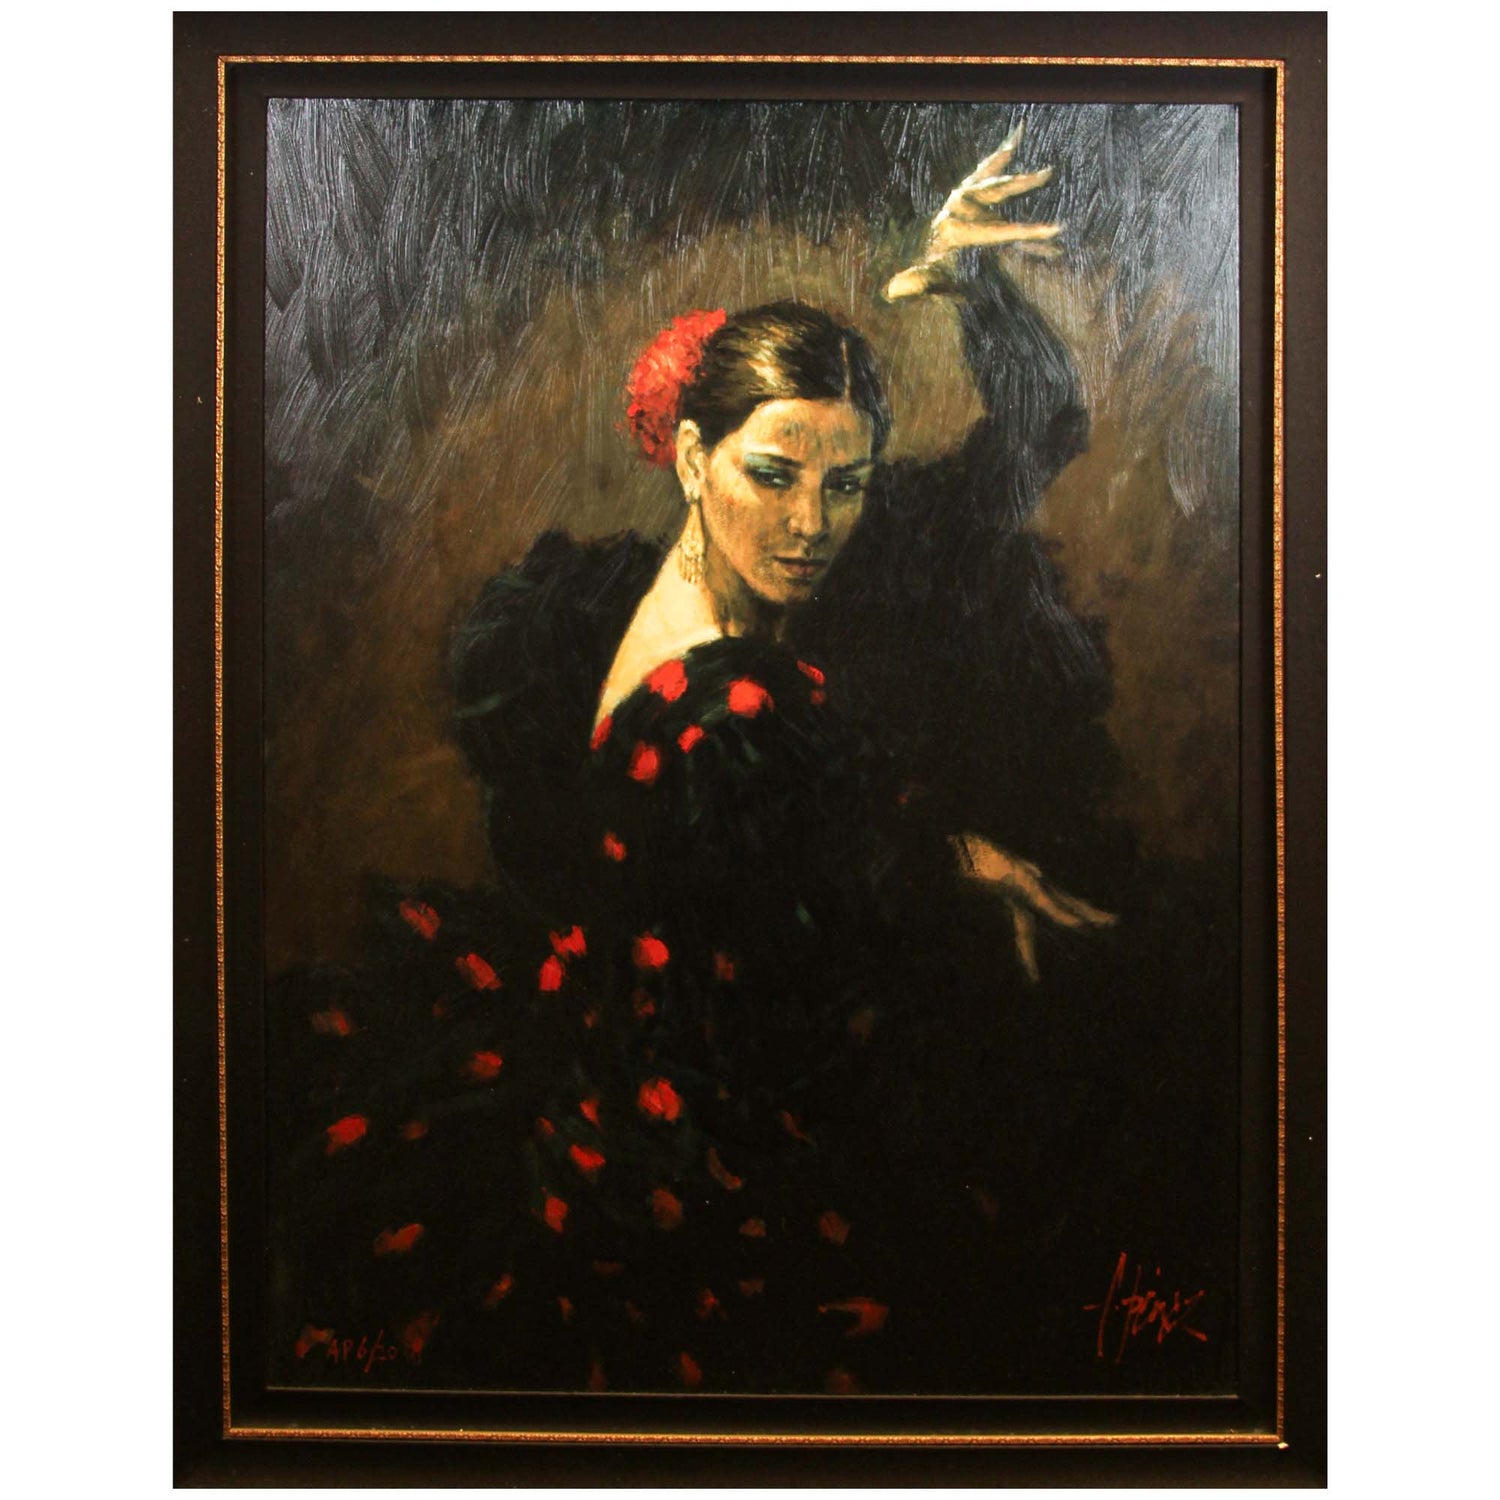 Fabian Perez; "Pasion Flamenco" ZOOM